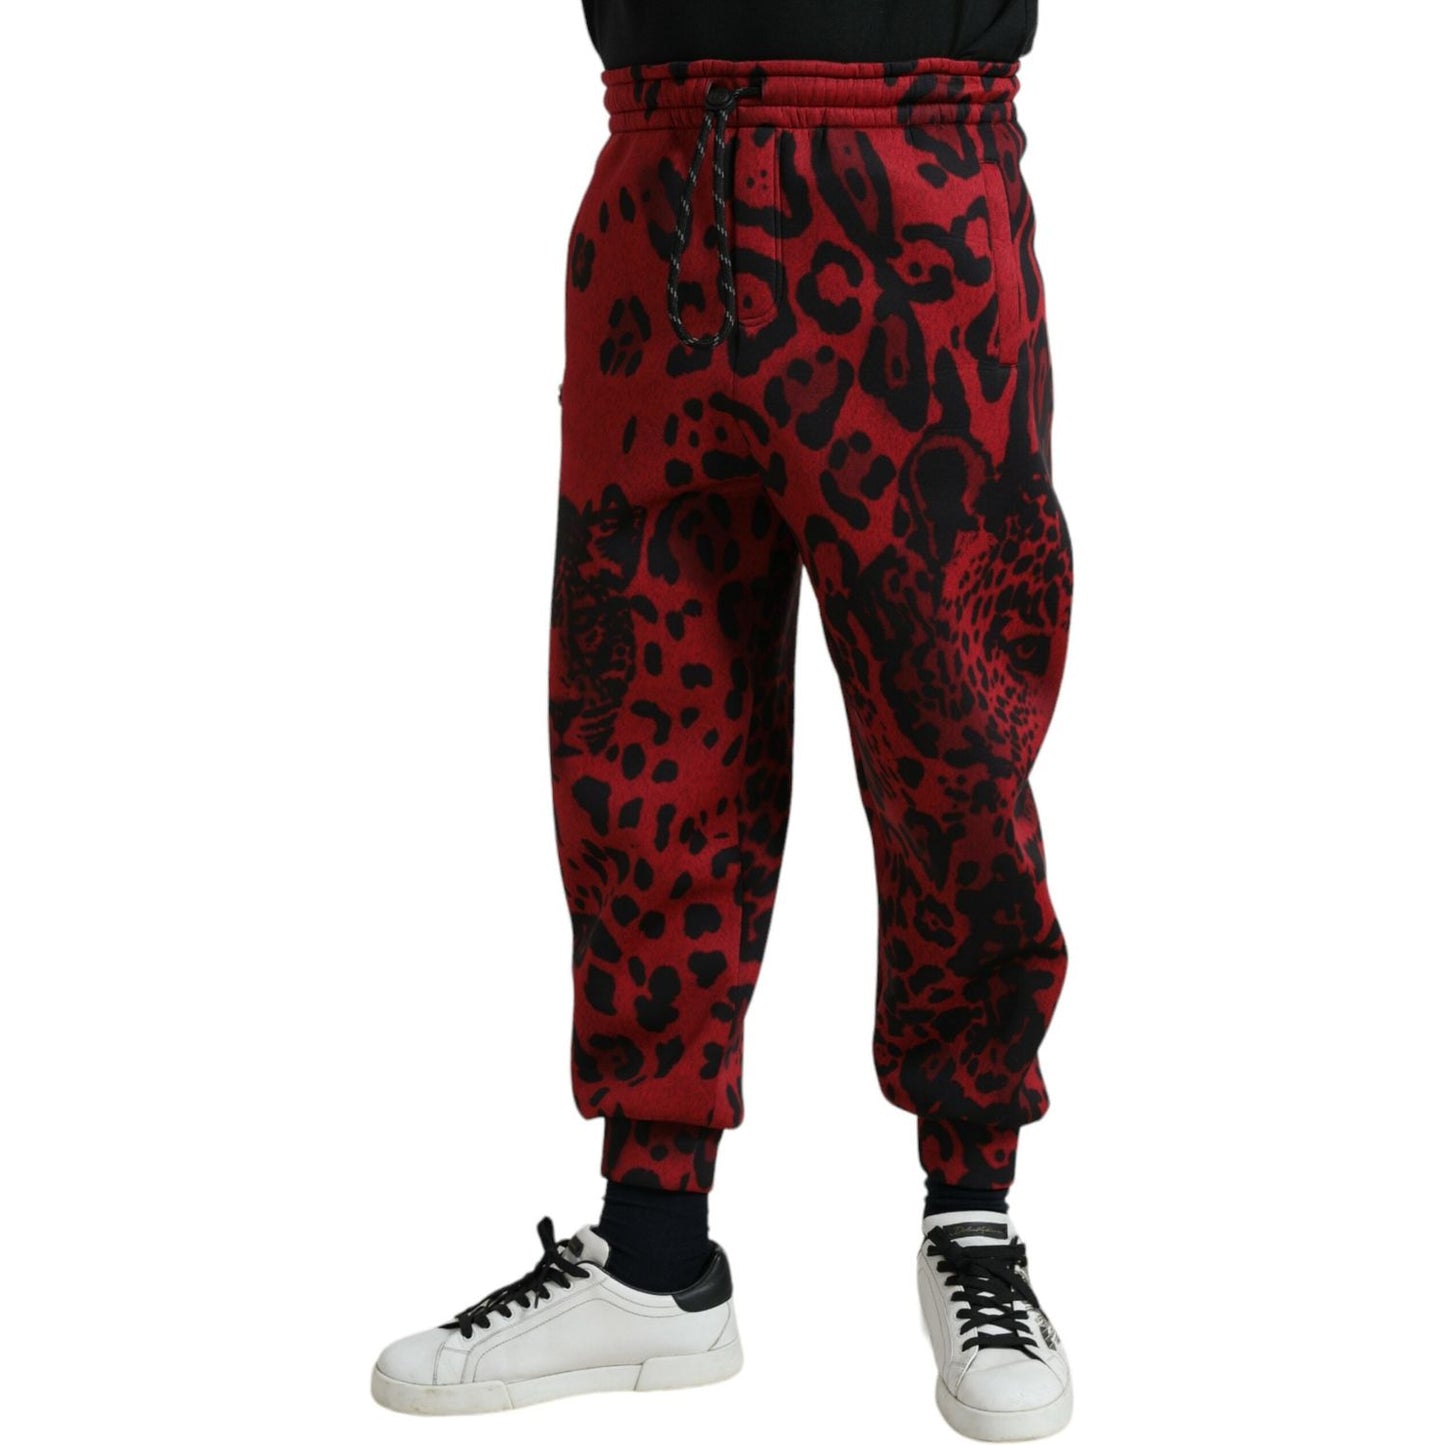 Dolce & Gabbana Elegant Leopard Print Joggers red-black-leopard-print-stretch-jogger-pants